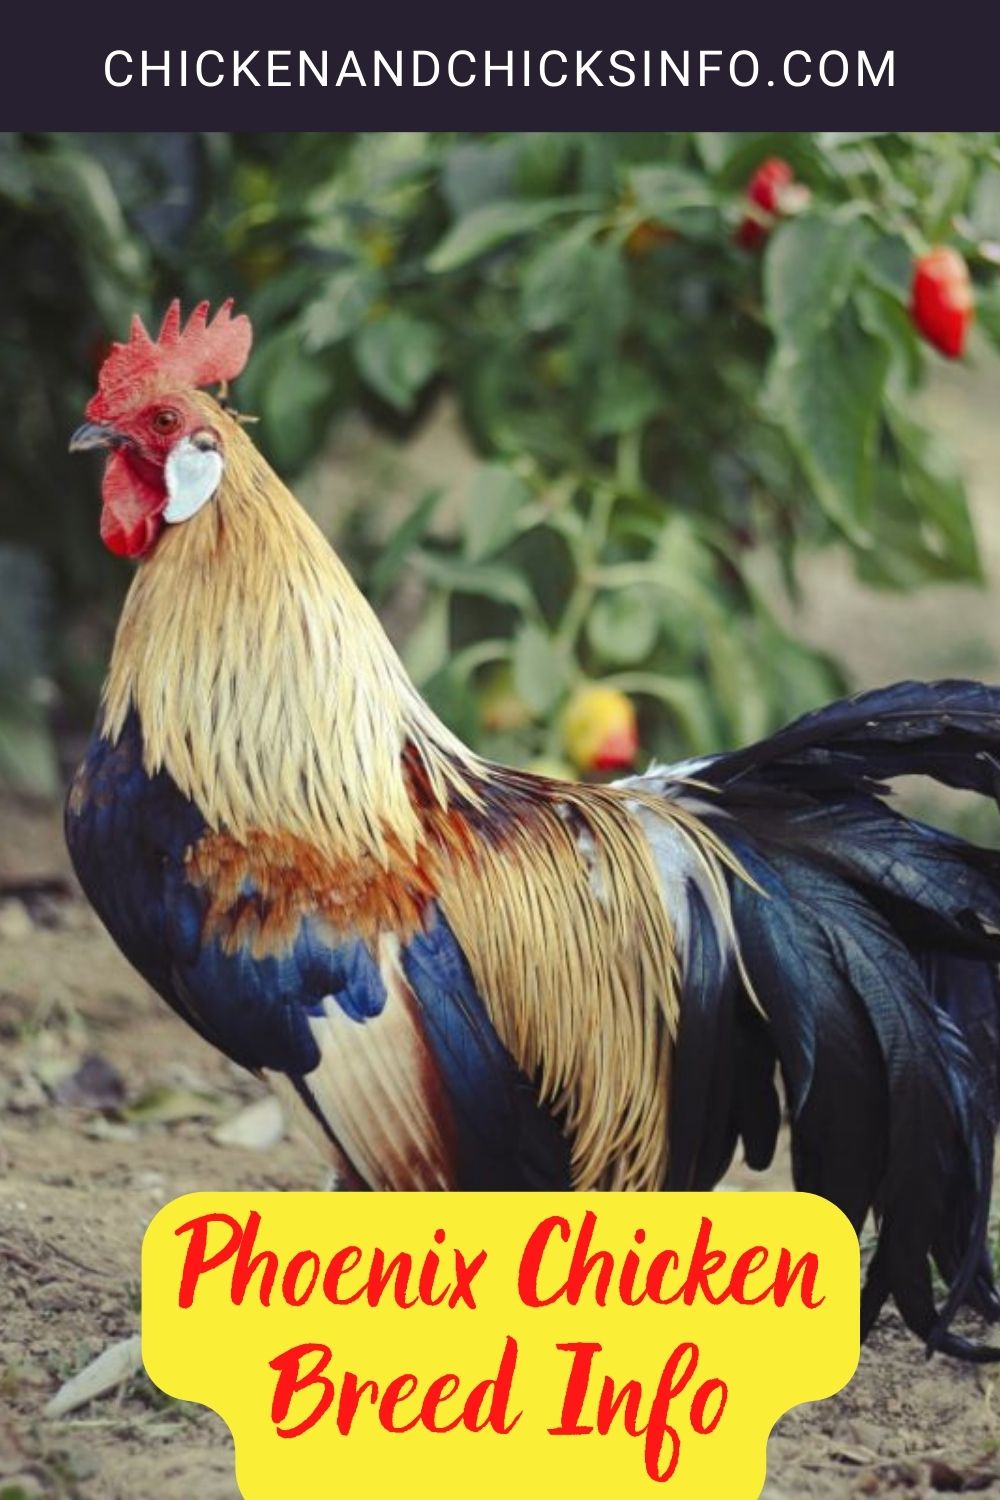 Phoenix Chicken Breed Info + Where to Buy pinterest image.